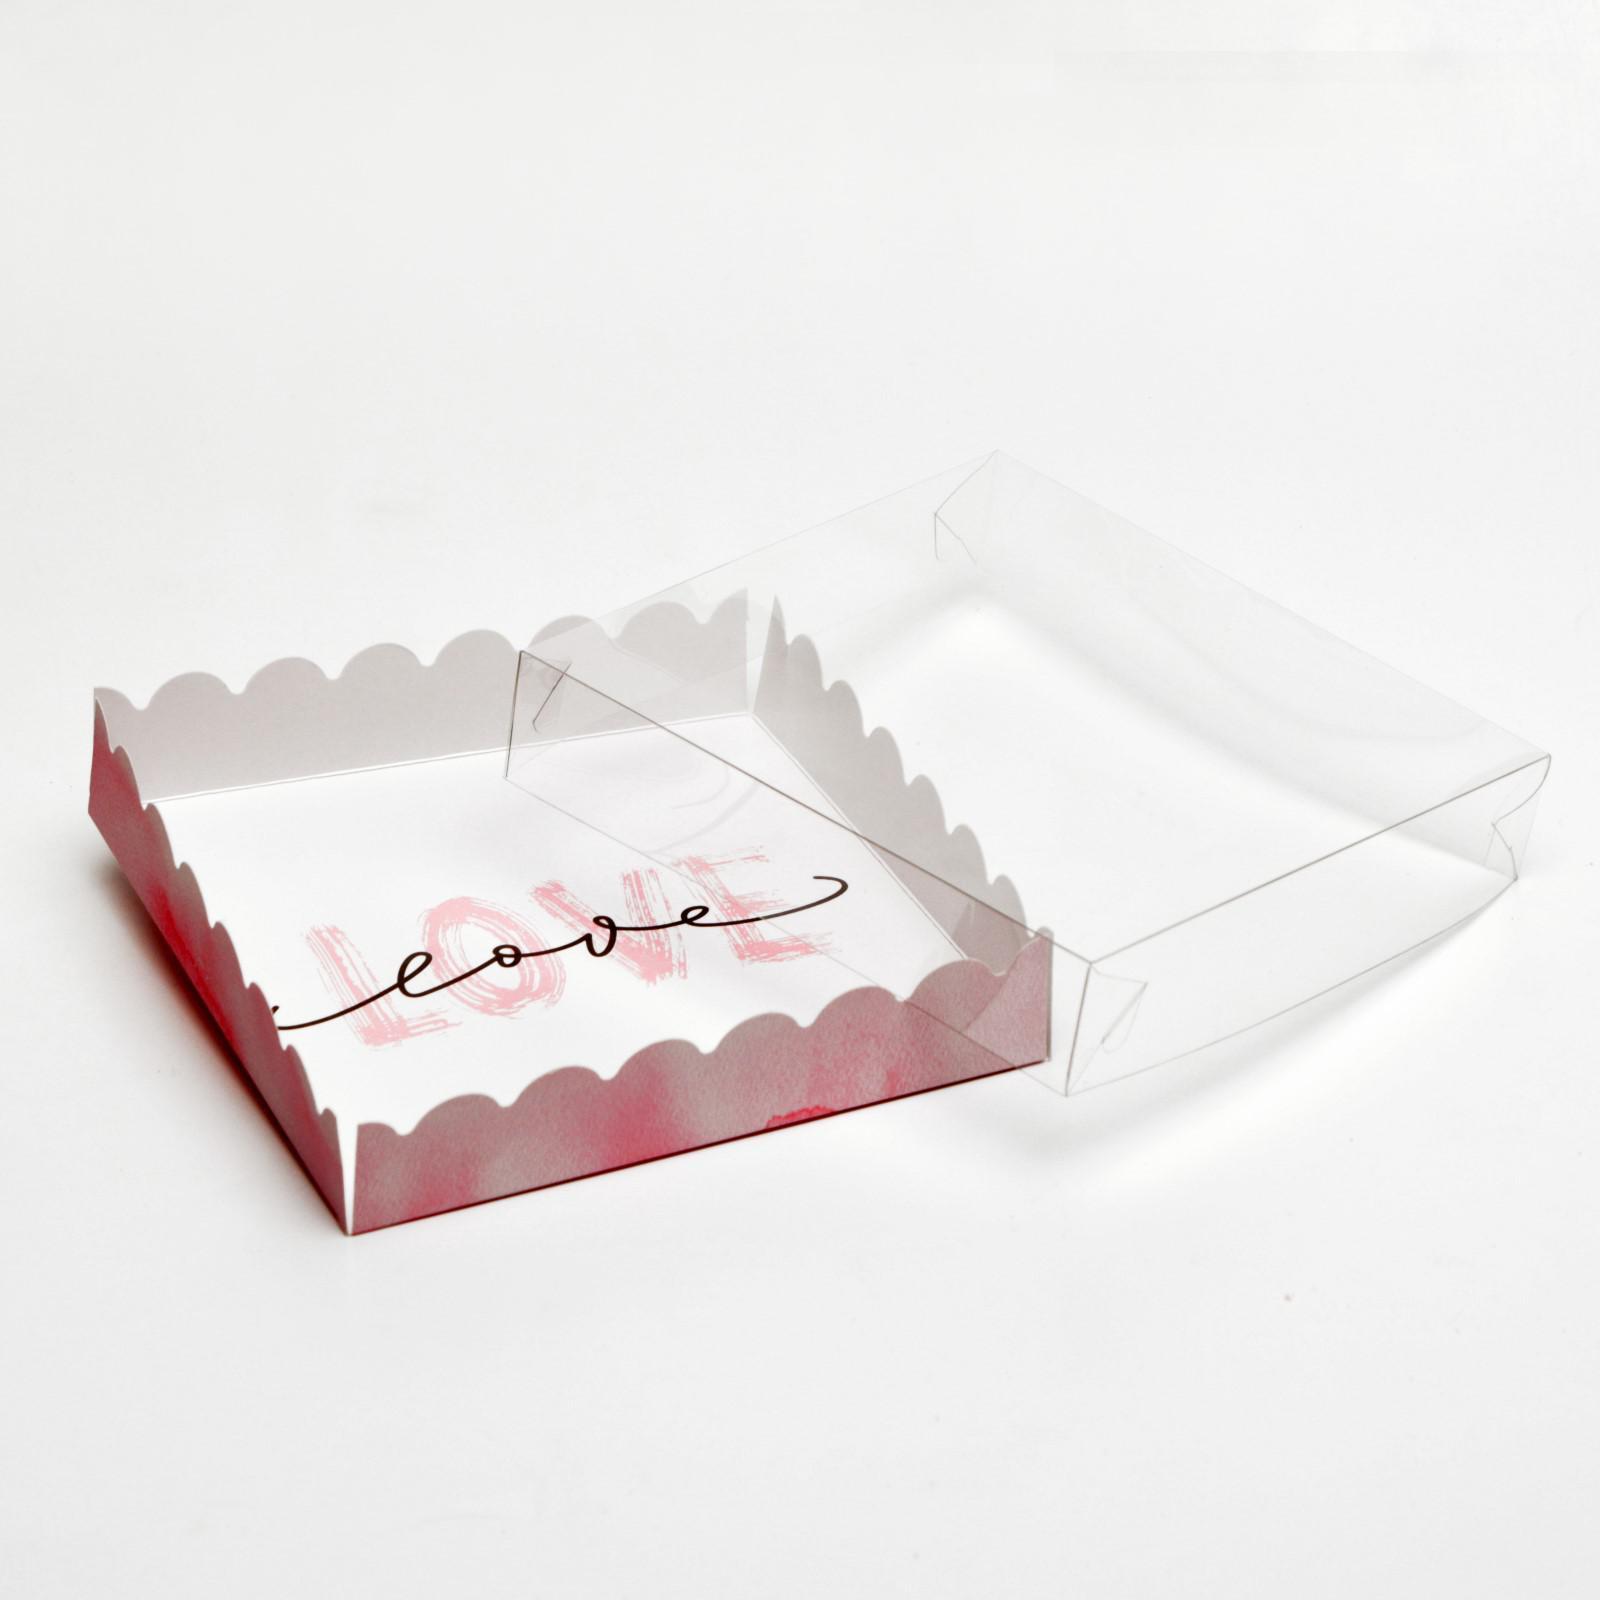 Коробочка для печенья с PVC крышкой, "Нежная любовь", 15 х 15 х 3 см